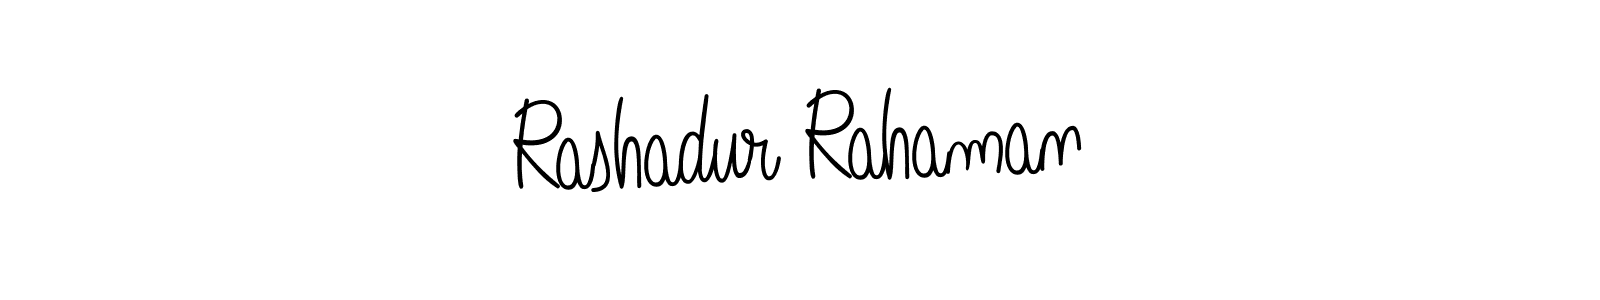 How to Draw Rashadur Rahaman signature style? Angelique-Rose-font-FFP is a latest design signature styles for name Rashadur Rahaman. Rashadur Rahaman signature style 5 images and pictures png